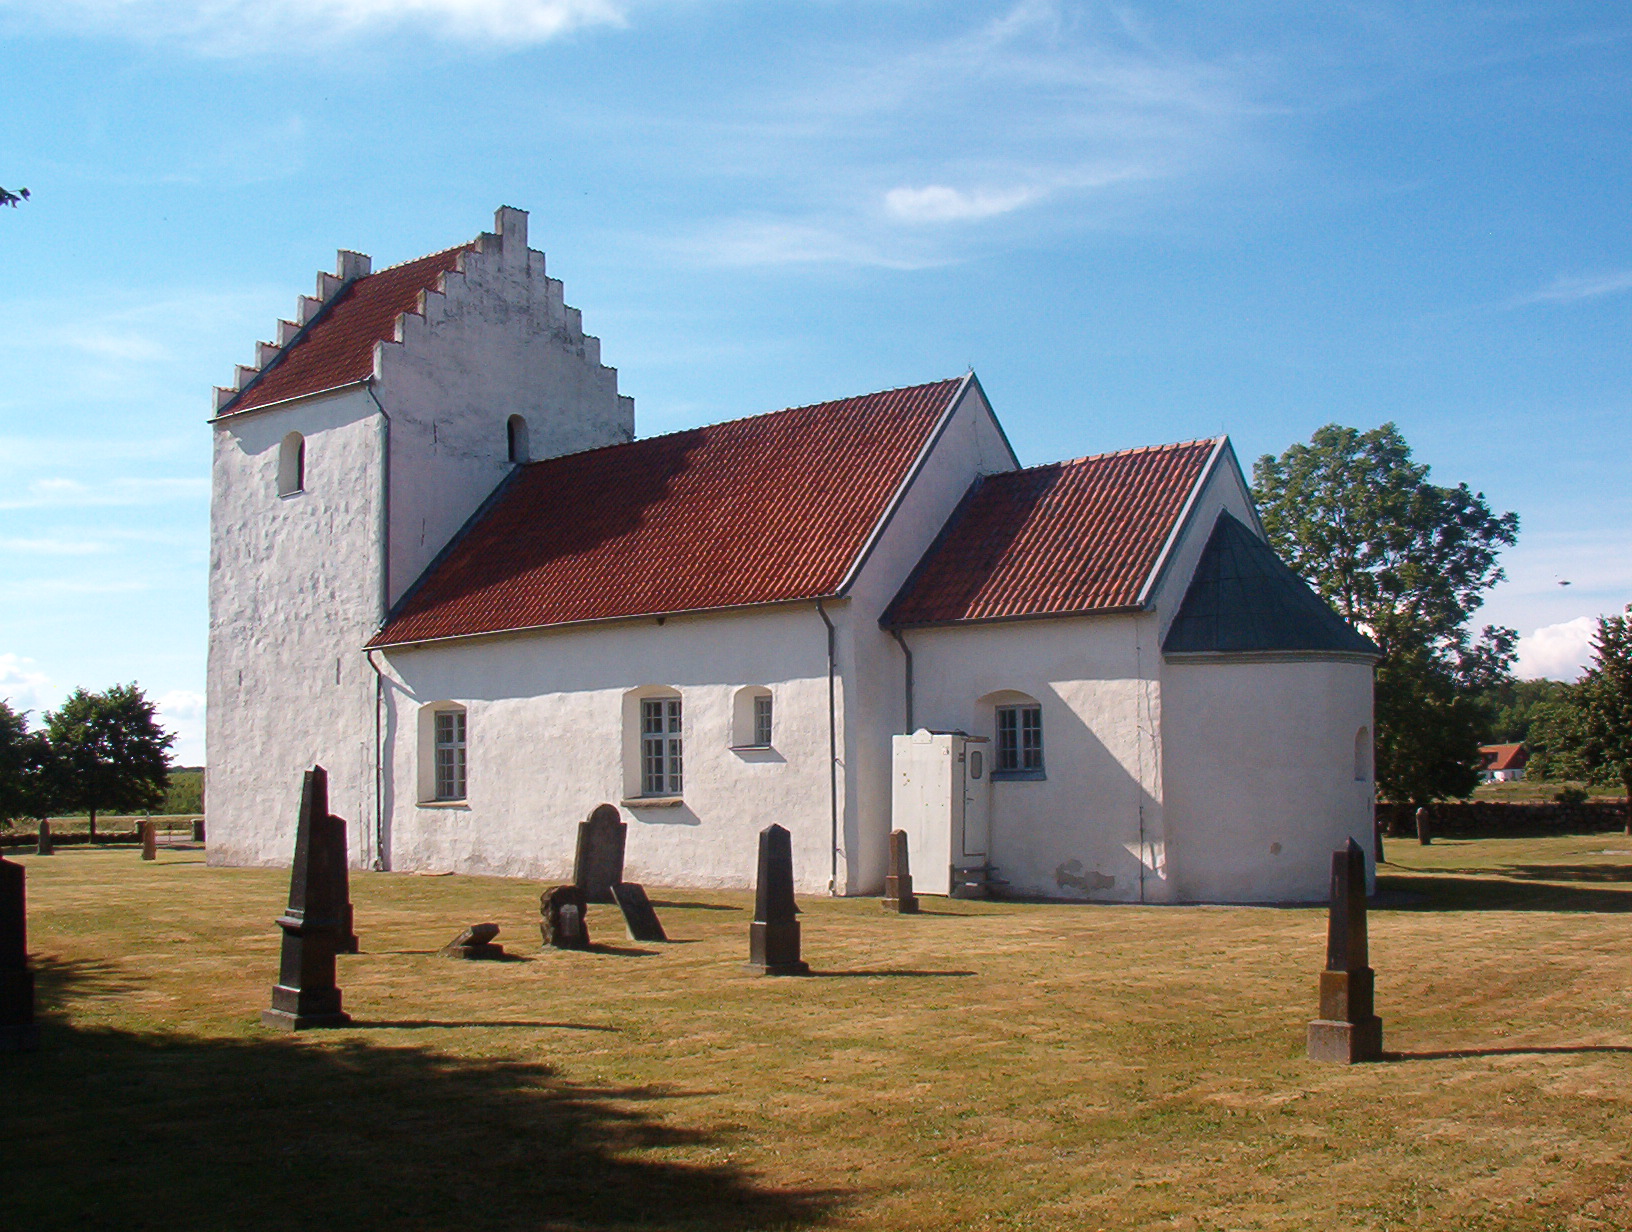 File:Södra Åsum Old Church.jpg - Wikimedia Commons